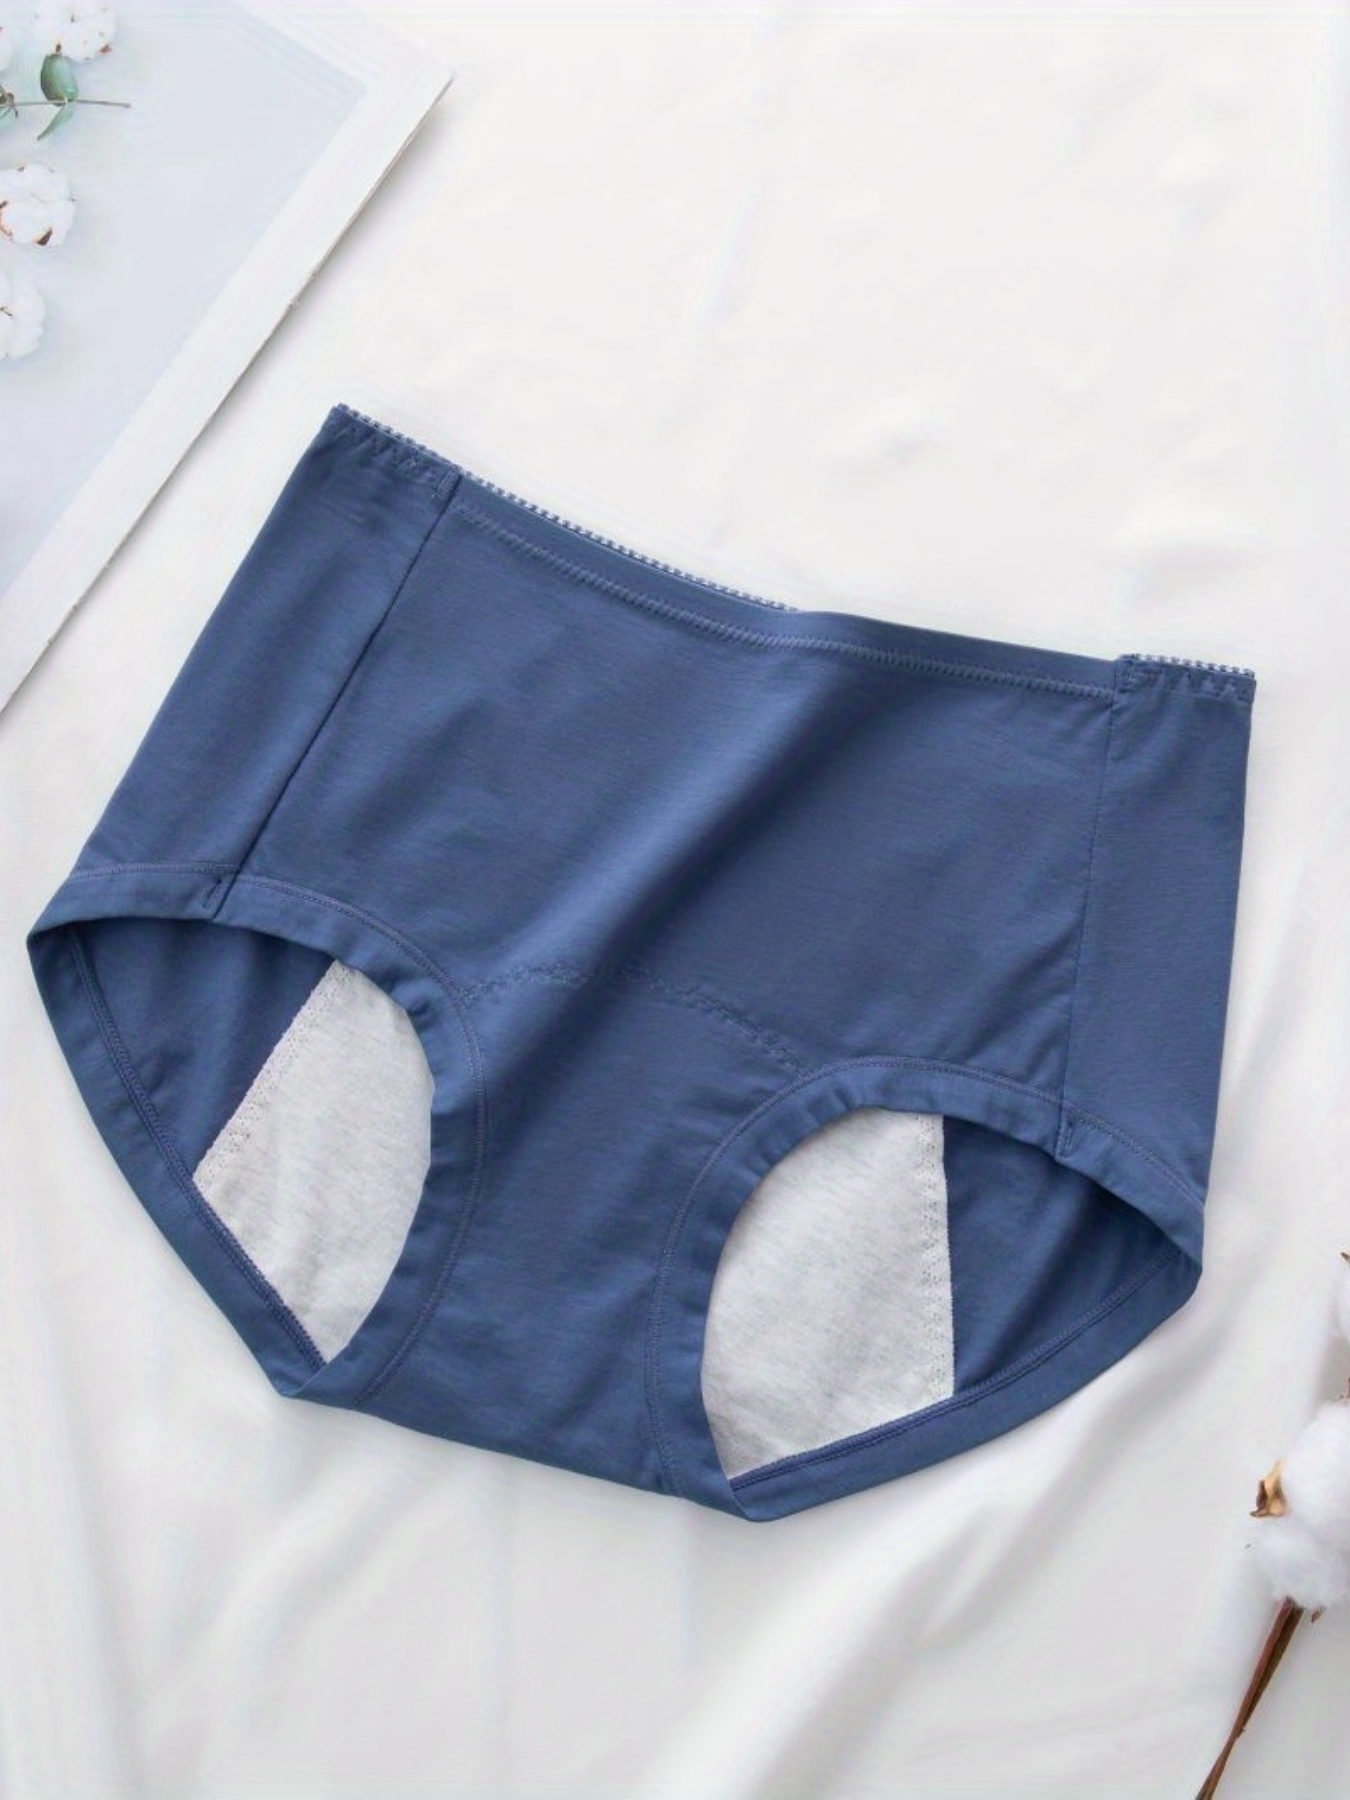 Fulidngzg Women's Underwear: Heavy Bleeding Period Underwear First